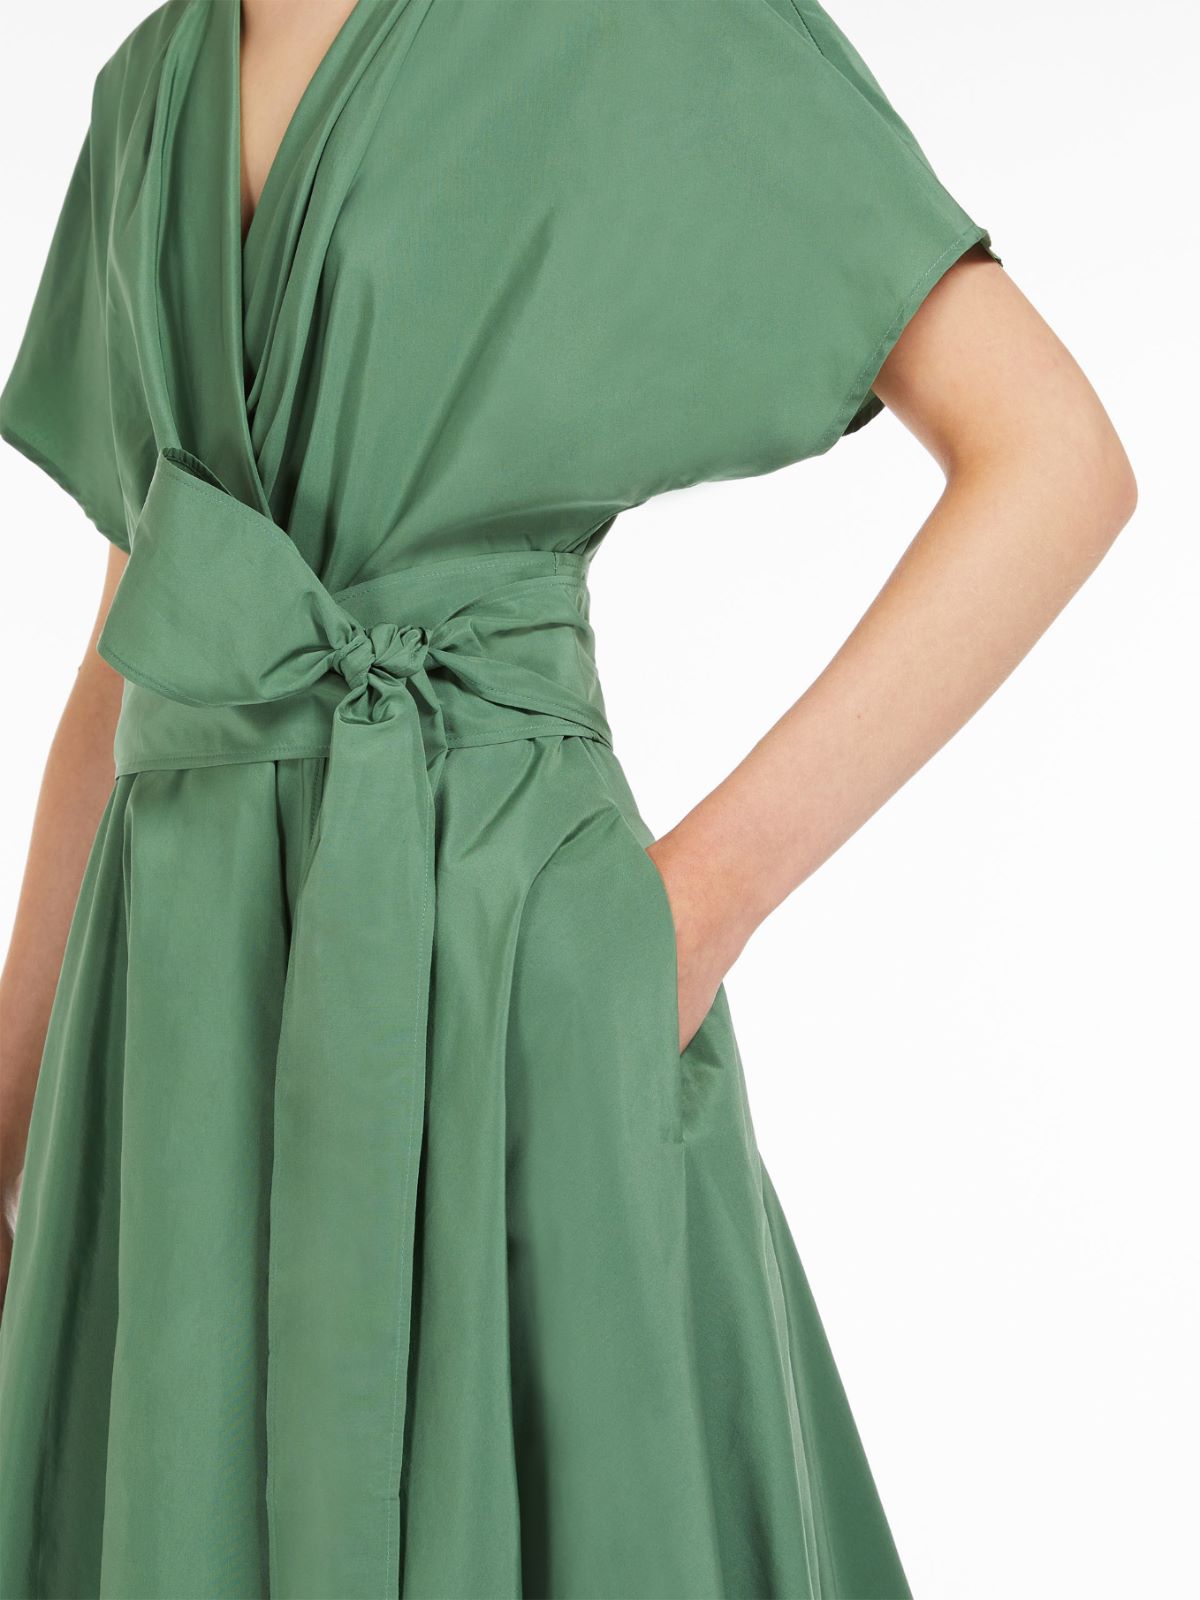 Cotton taffeta dress, green | Weekend Max Mara